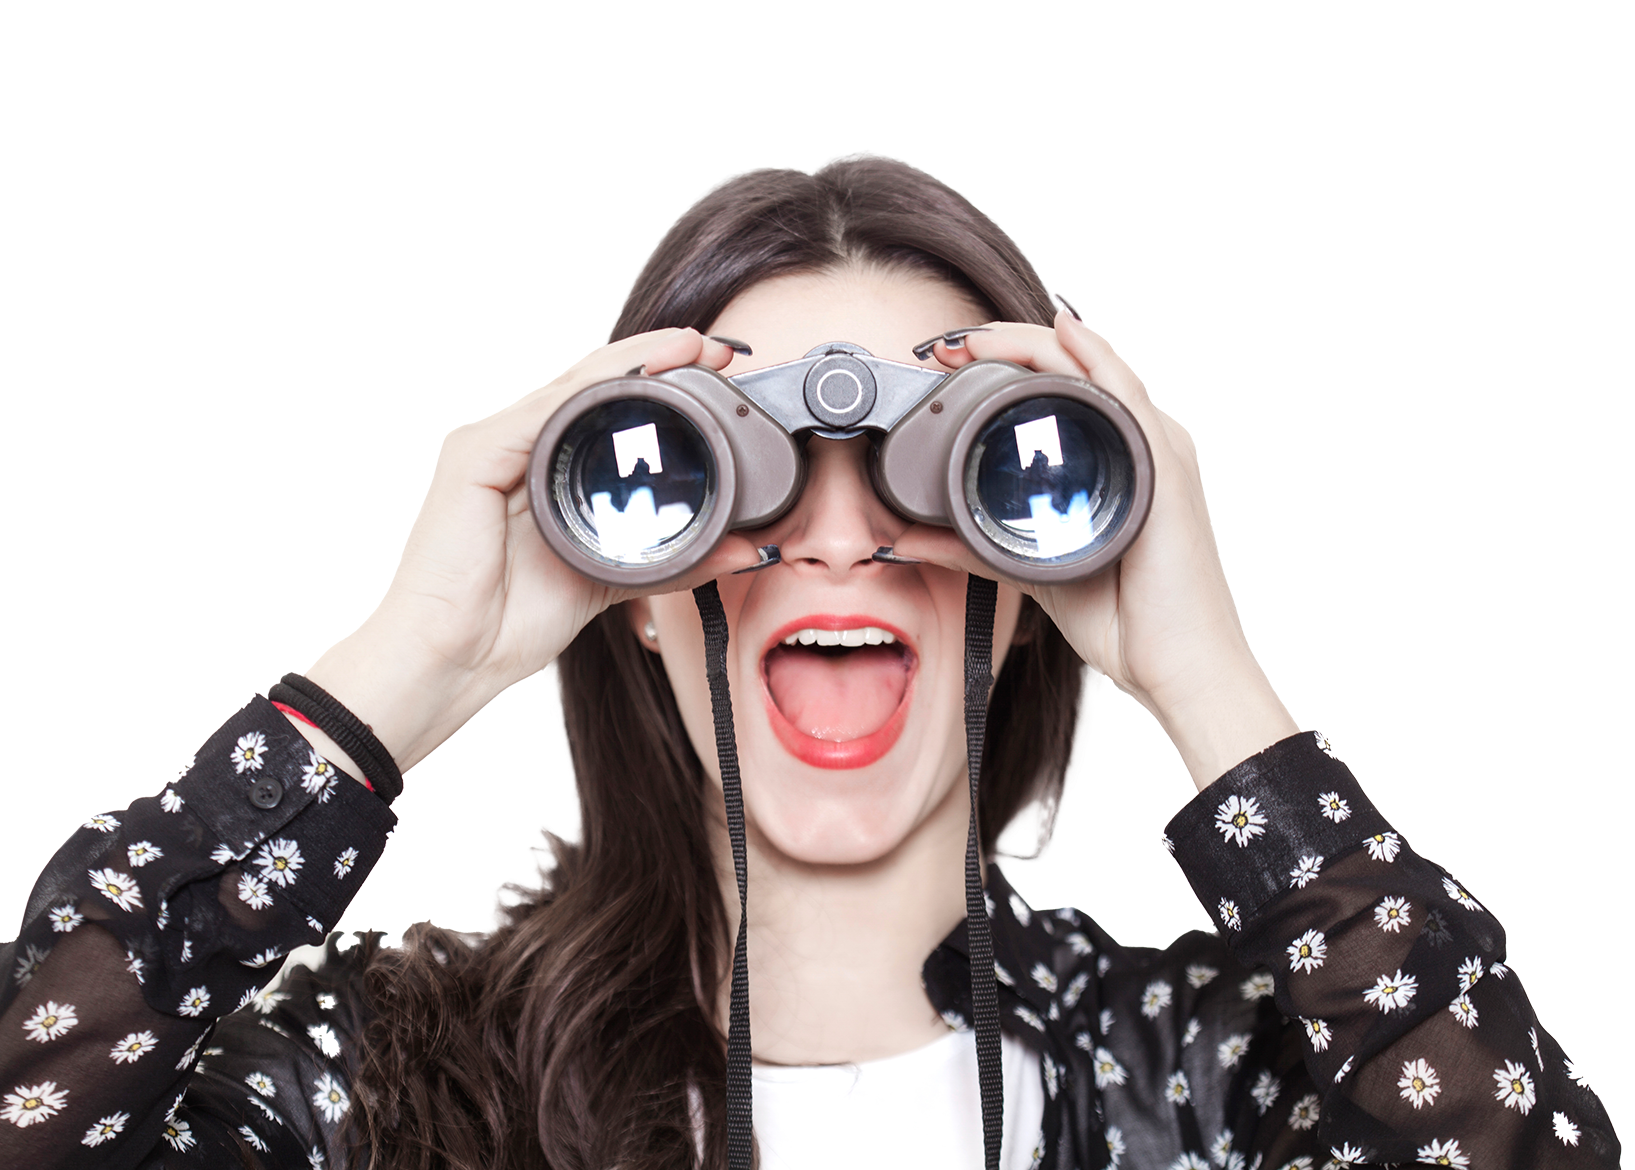 women looking through binoculars